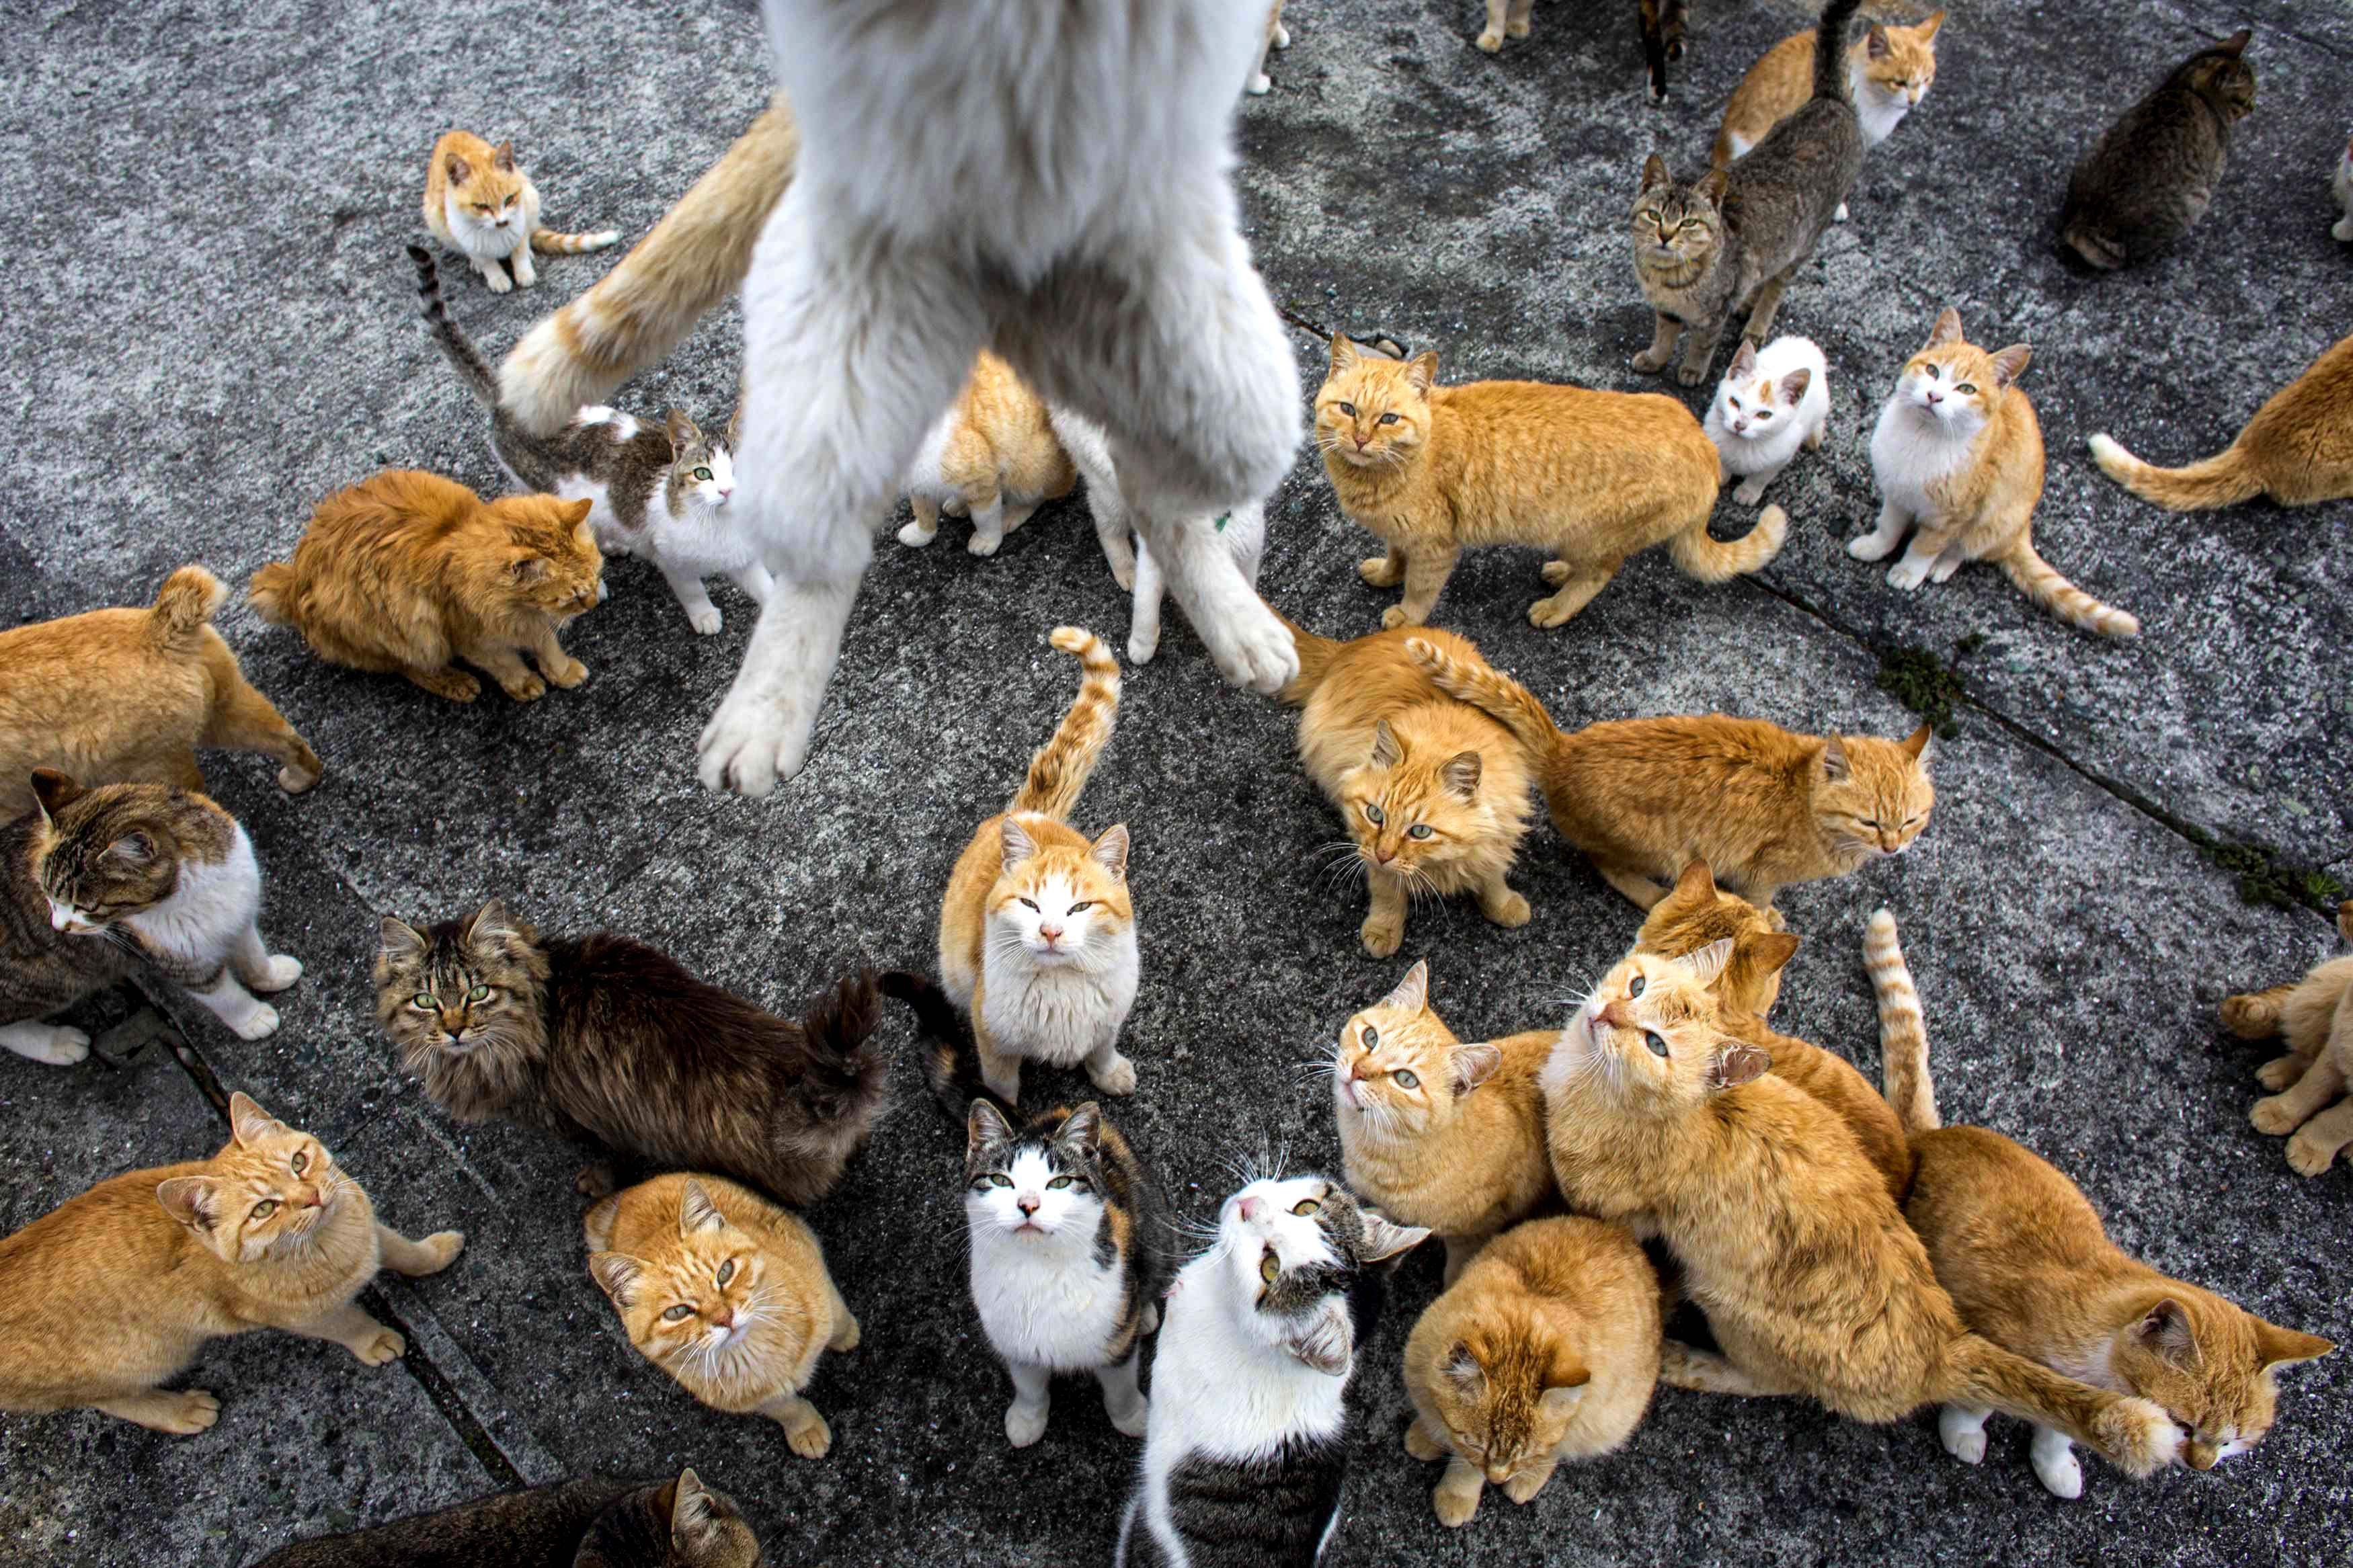 Включи много котика. Тасиро остров кошек. Аосима кошачий остров в Японии. Японский остров кошек Аошима. Остров Аосима остров кошек.